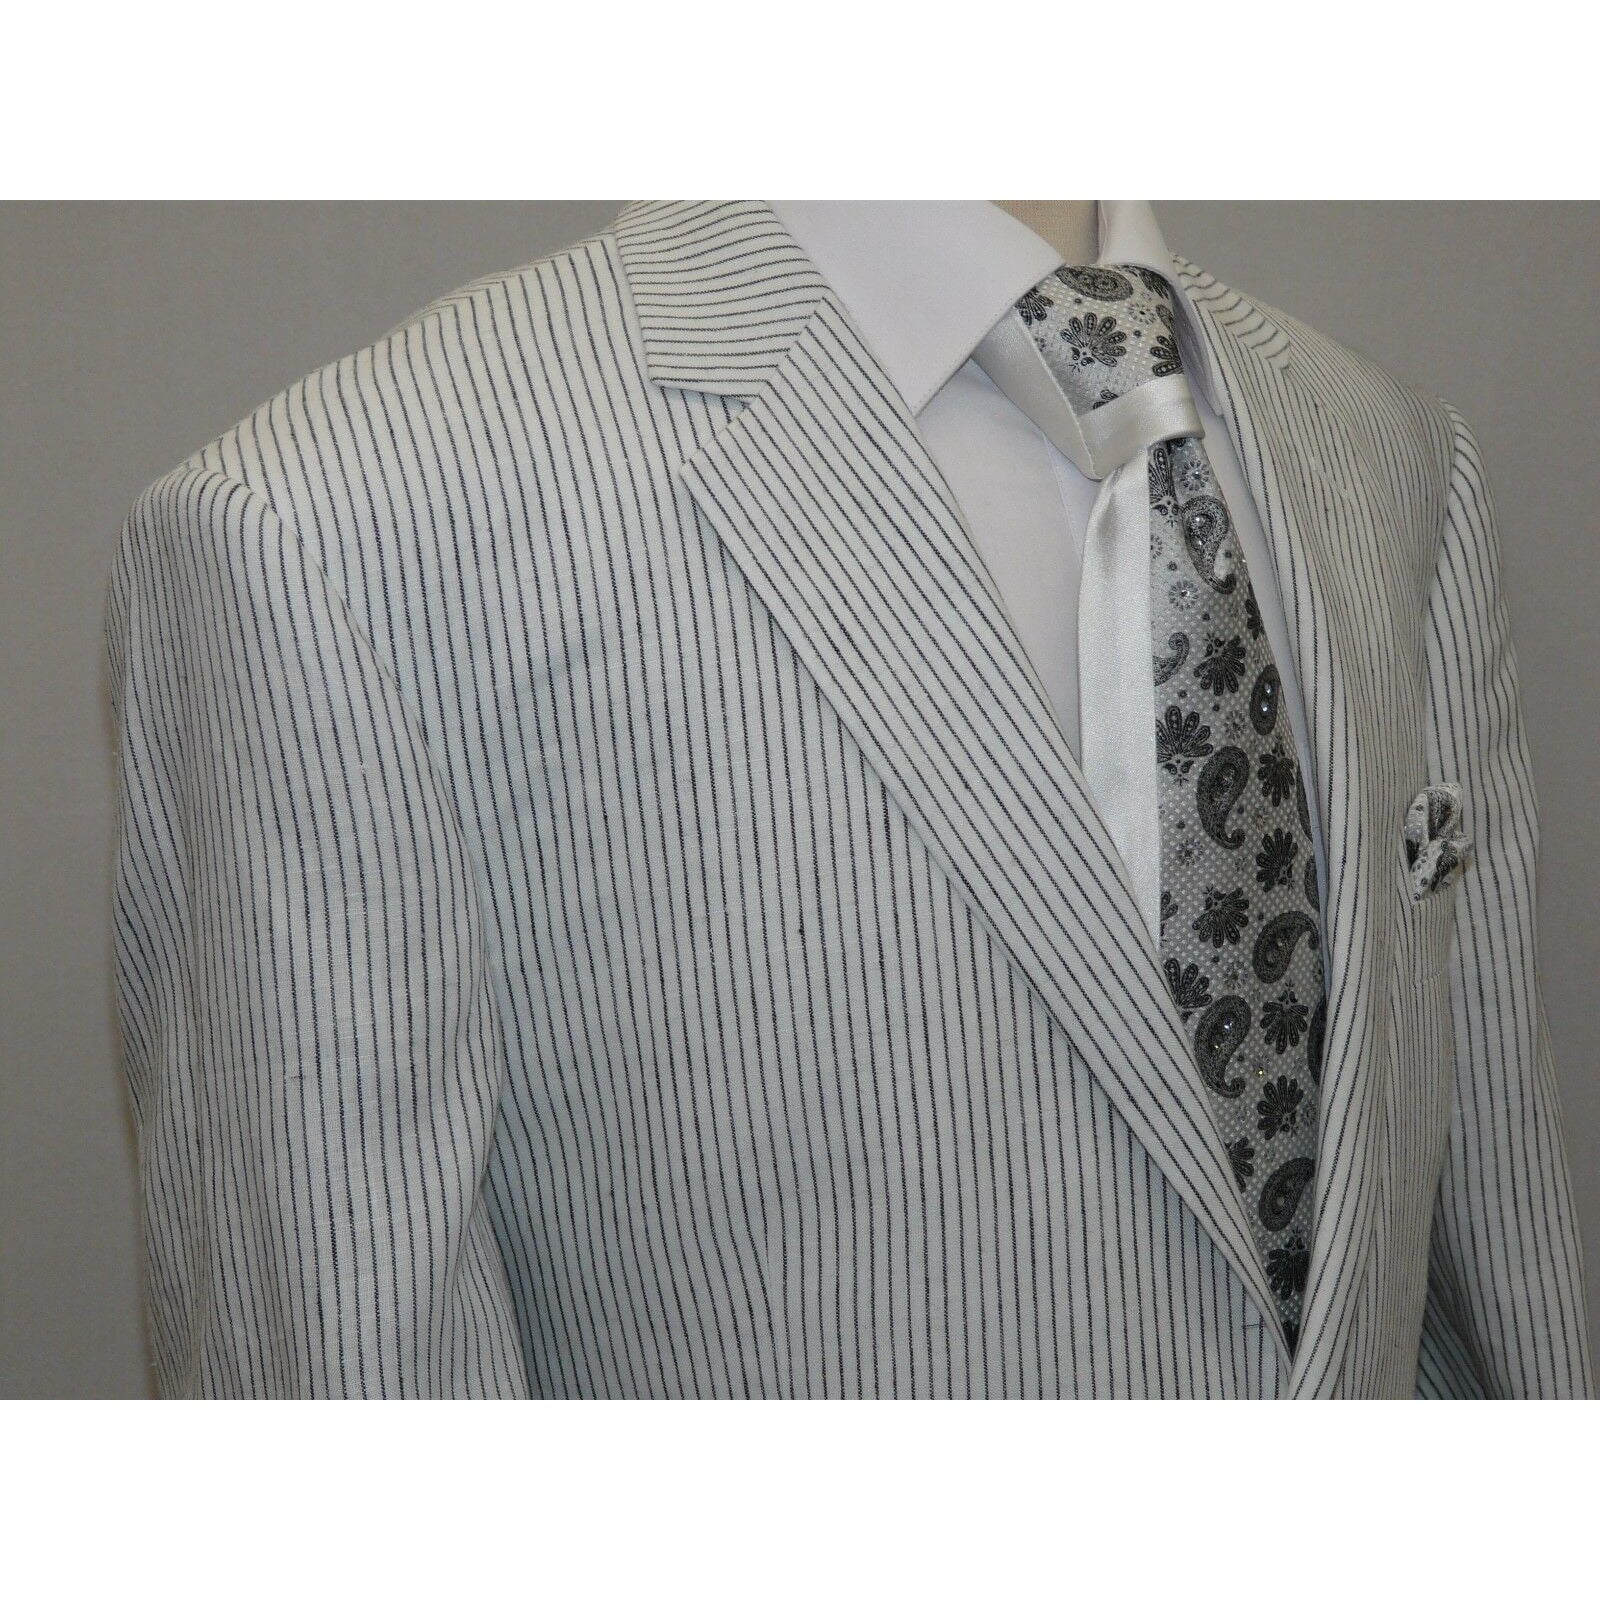 Mens Renoir  All  Linen Summer Suit Pin Stripe Light Notch Lapel  606-6 White